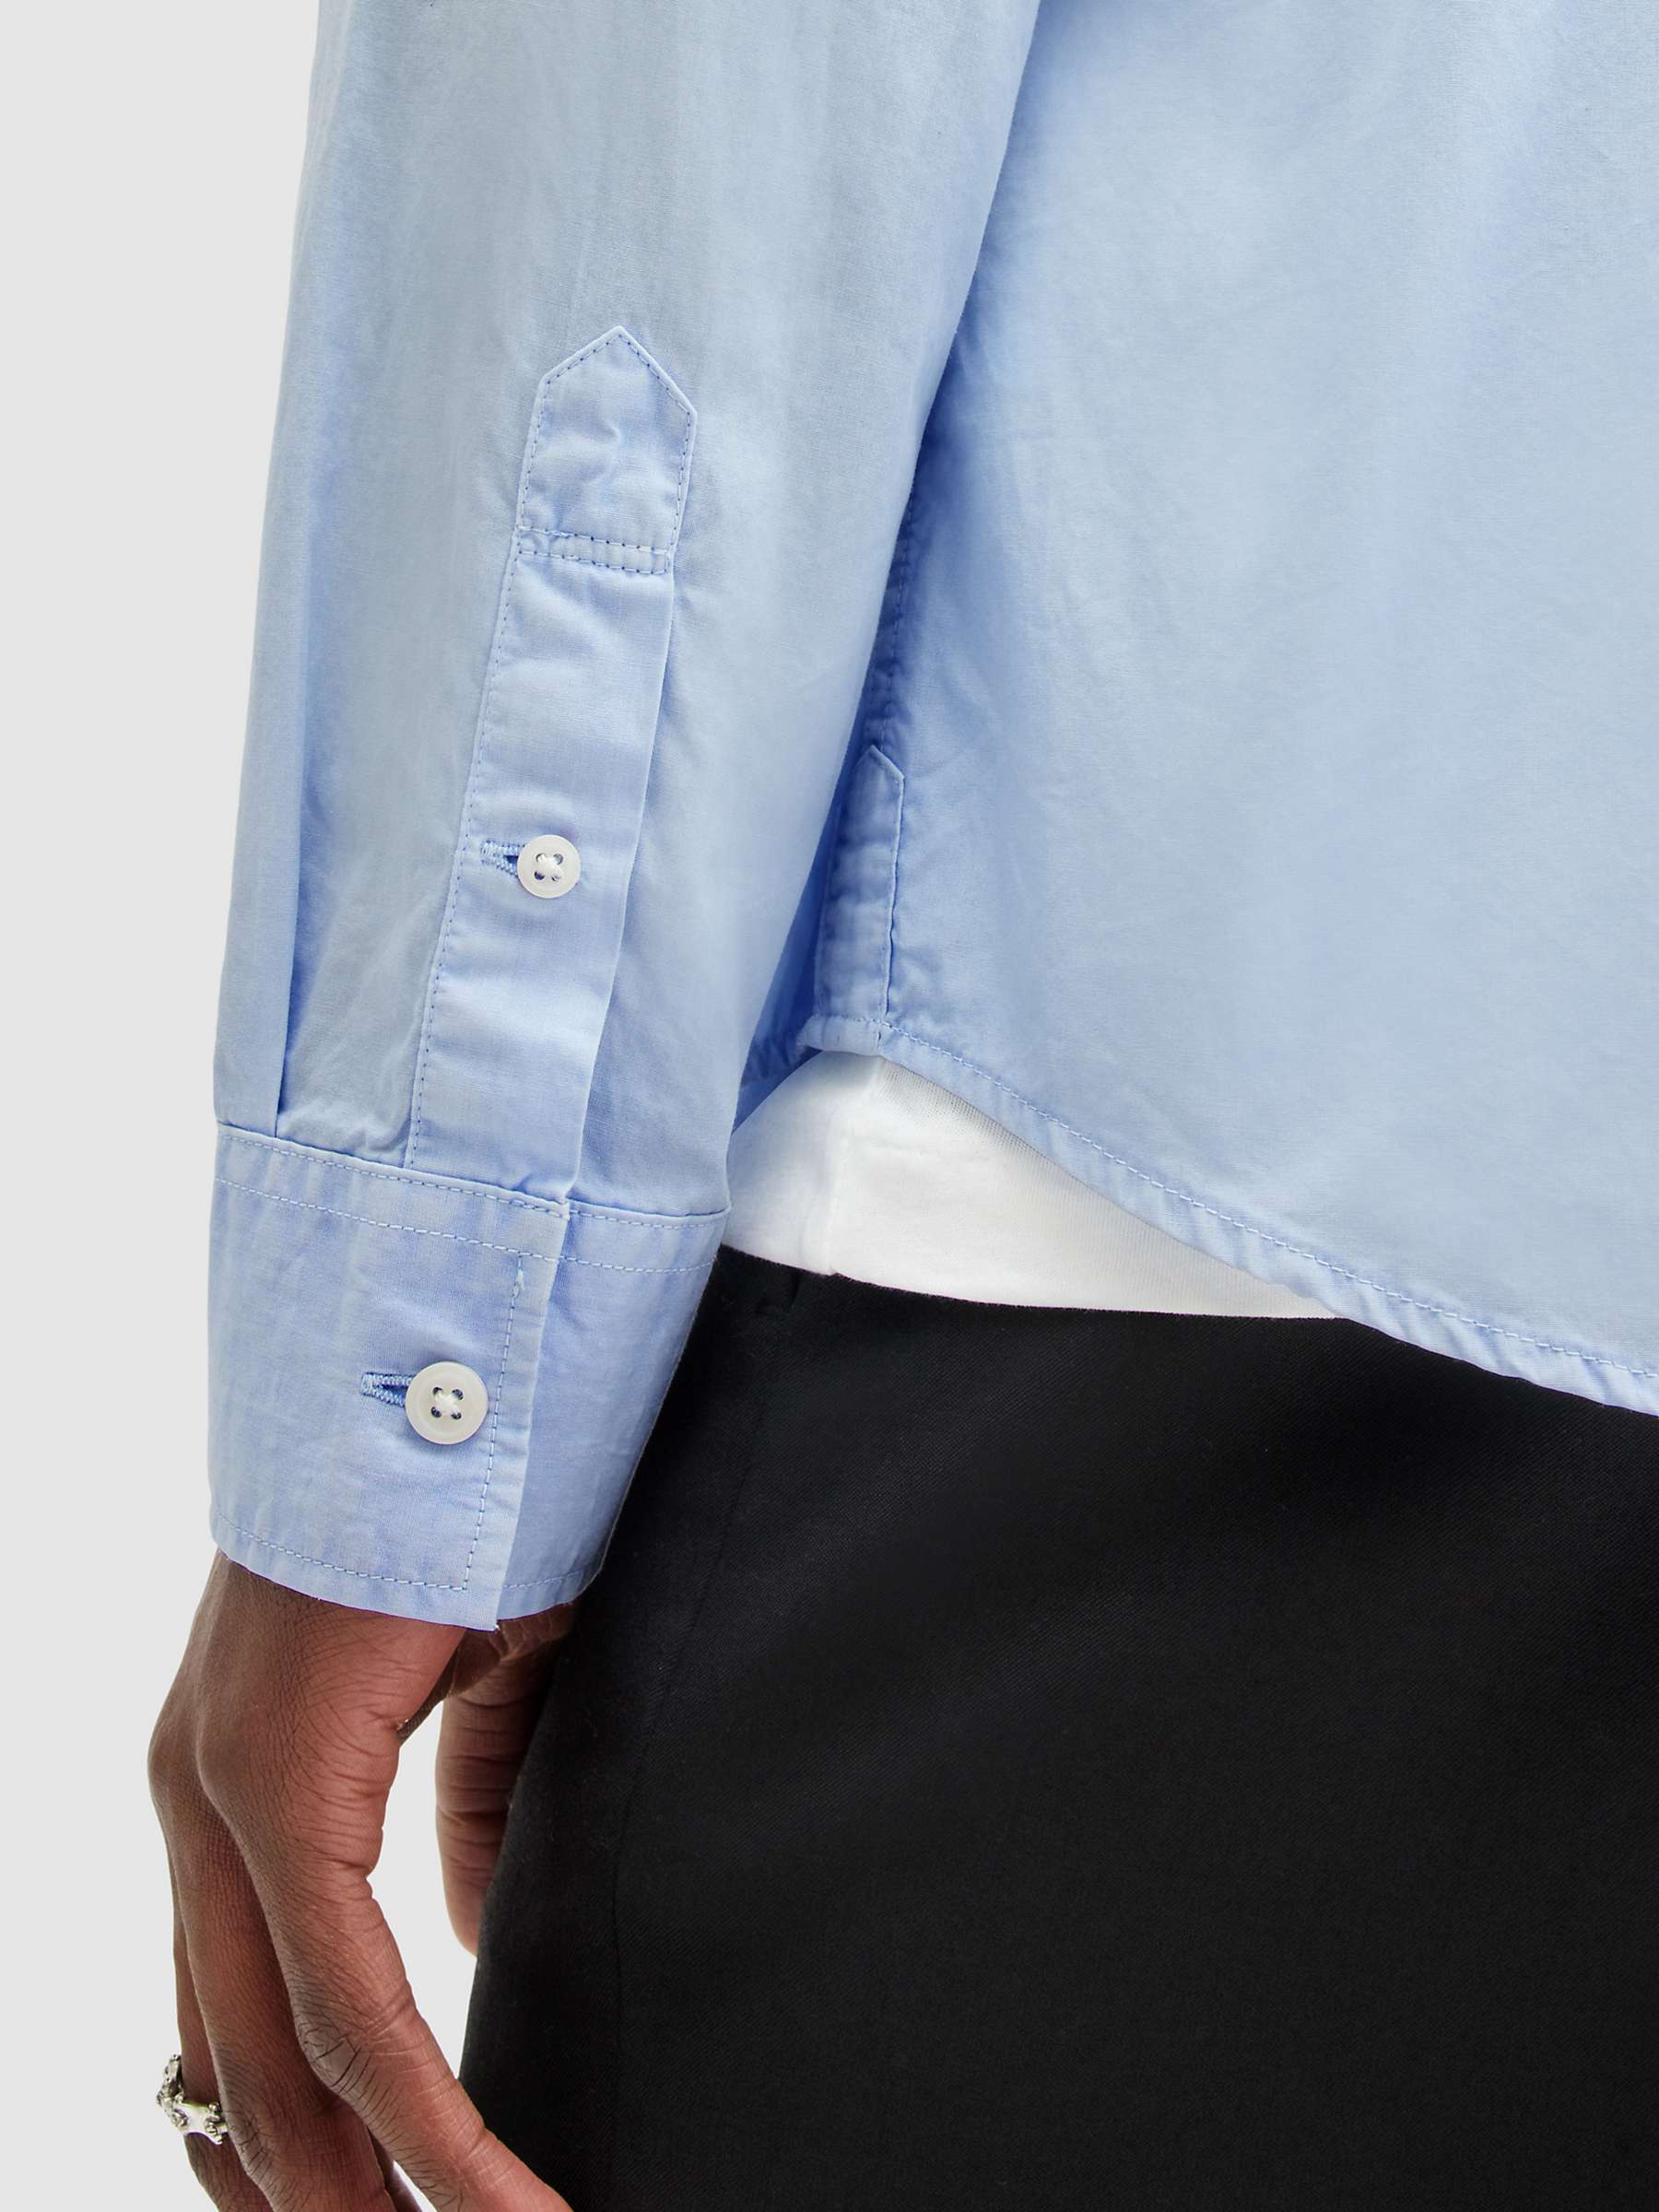 Buy AllSaints Tahoe Long Sleeve Cotton Shirt Online at johnlewis.com